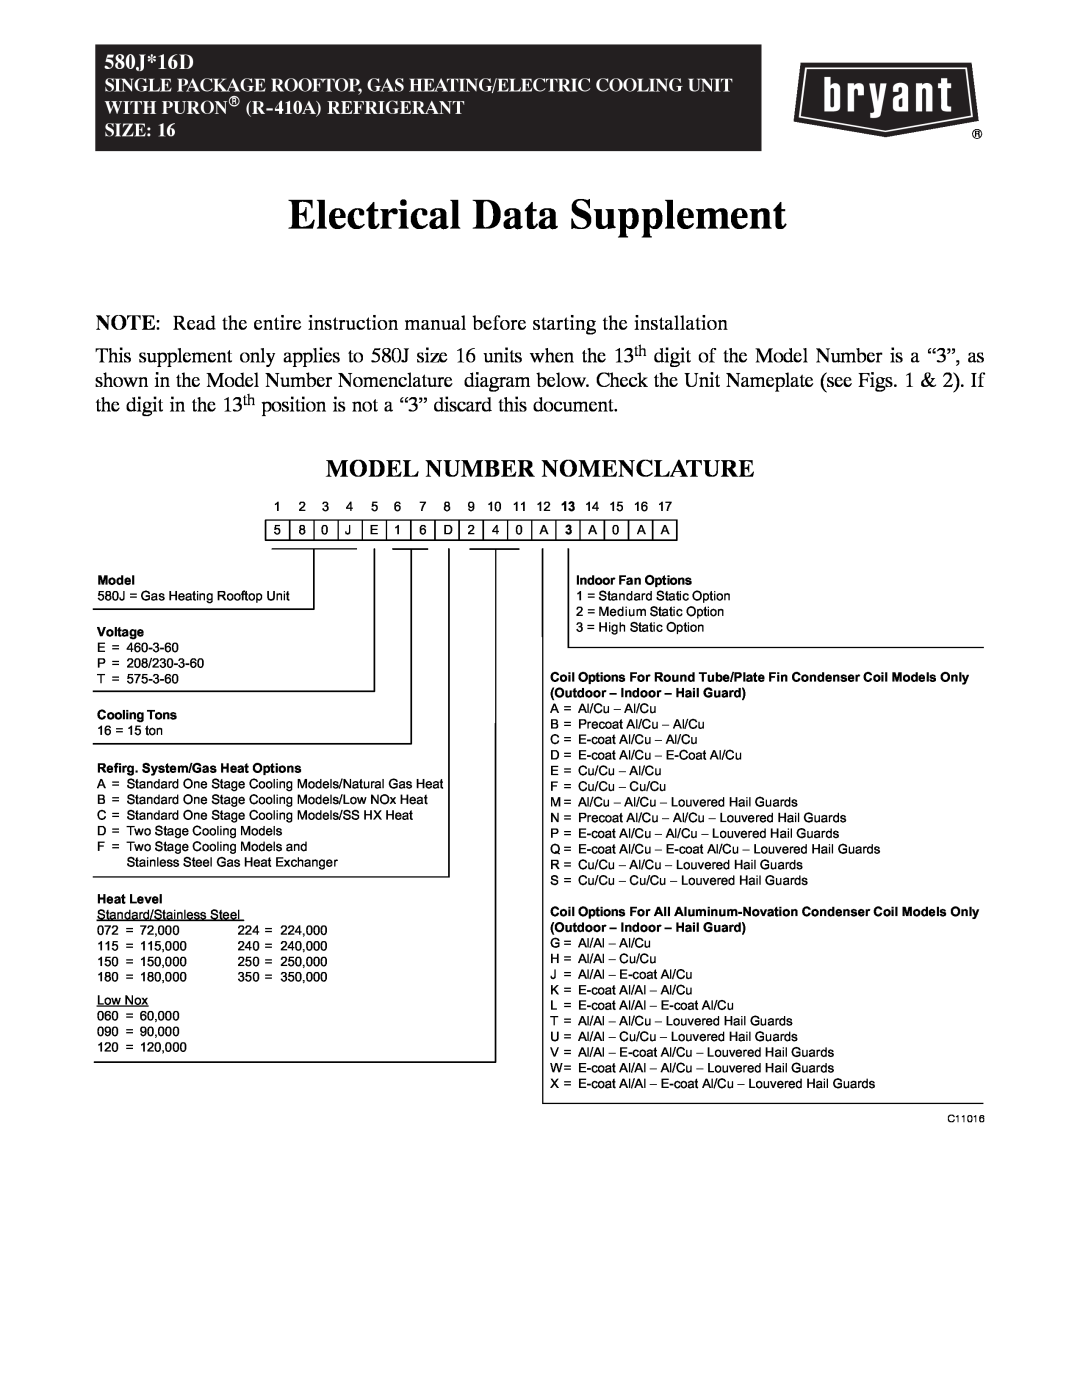 Bryant 580J*16D instruction manual Model Number Nomenclature, Electrical Data Supplement 